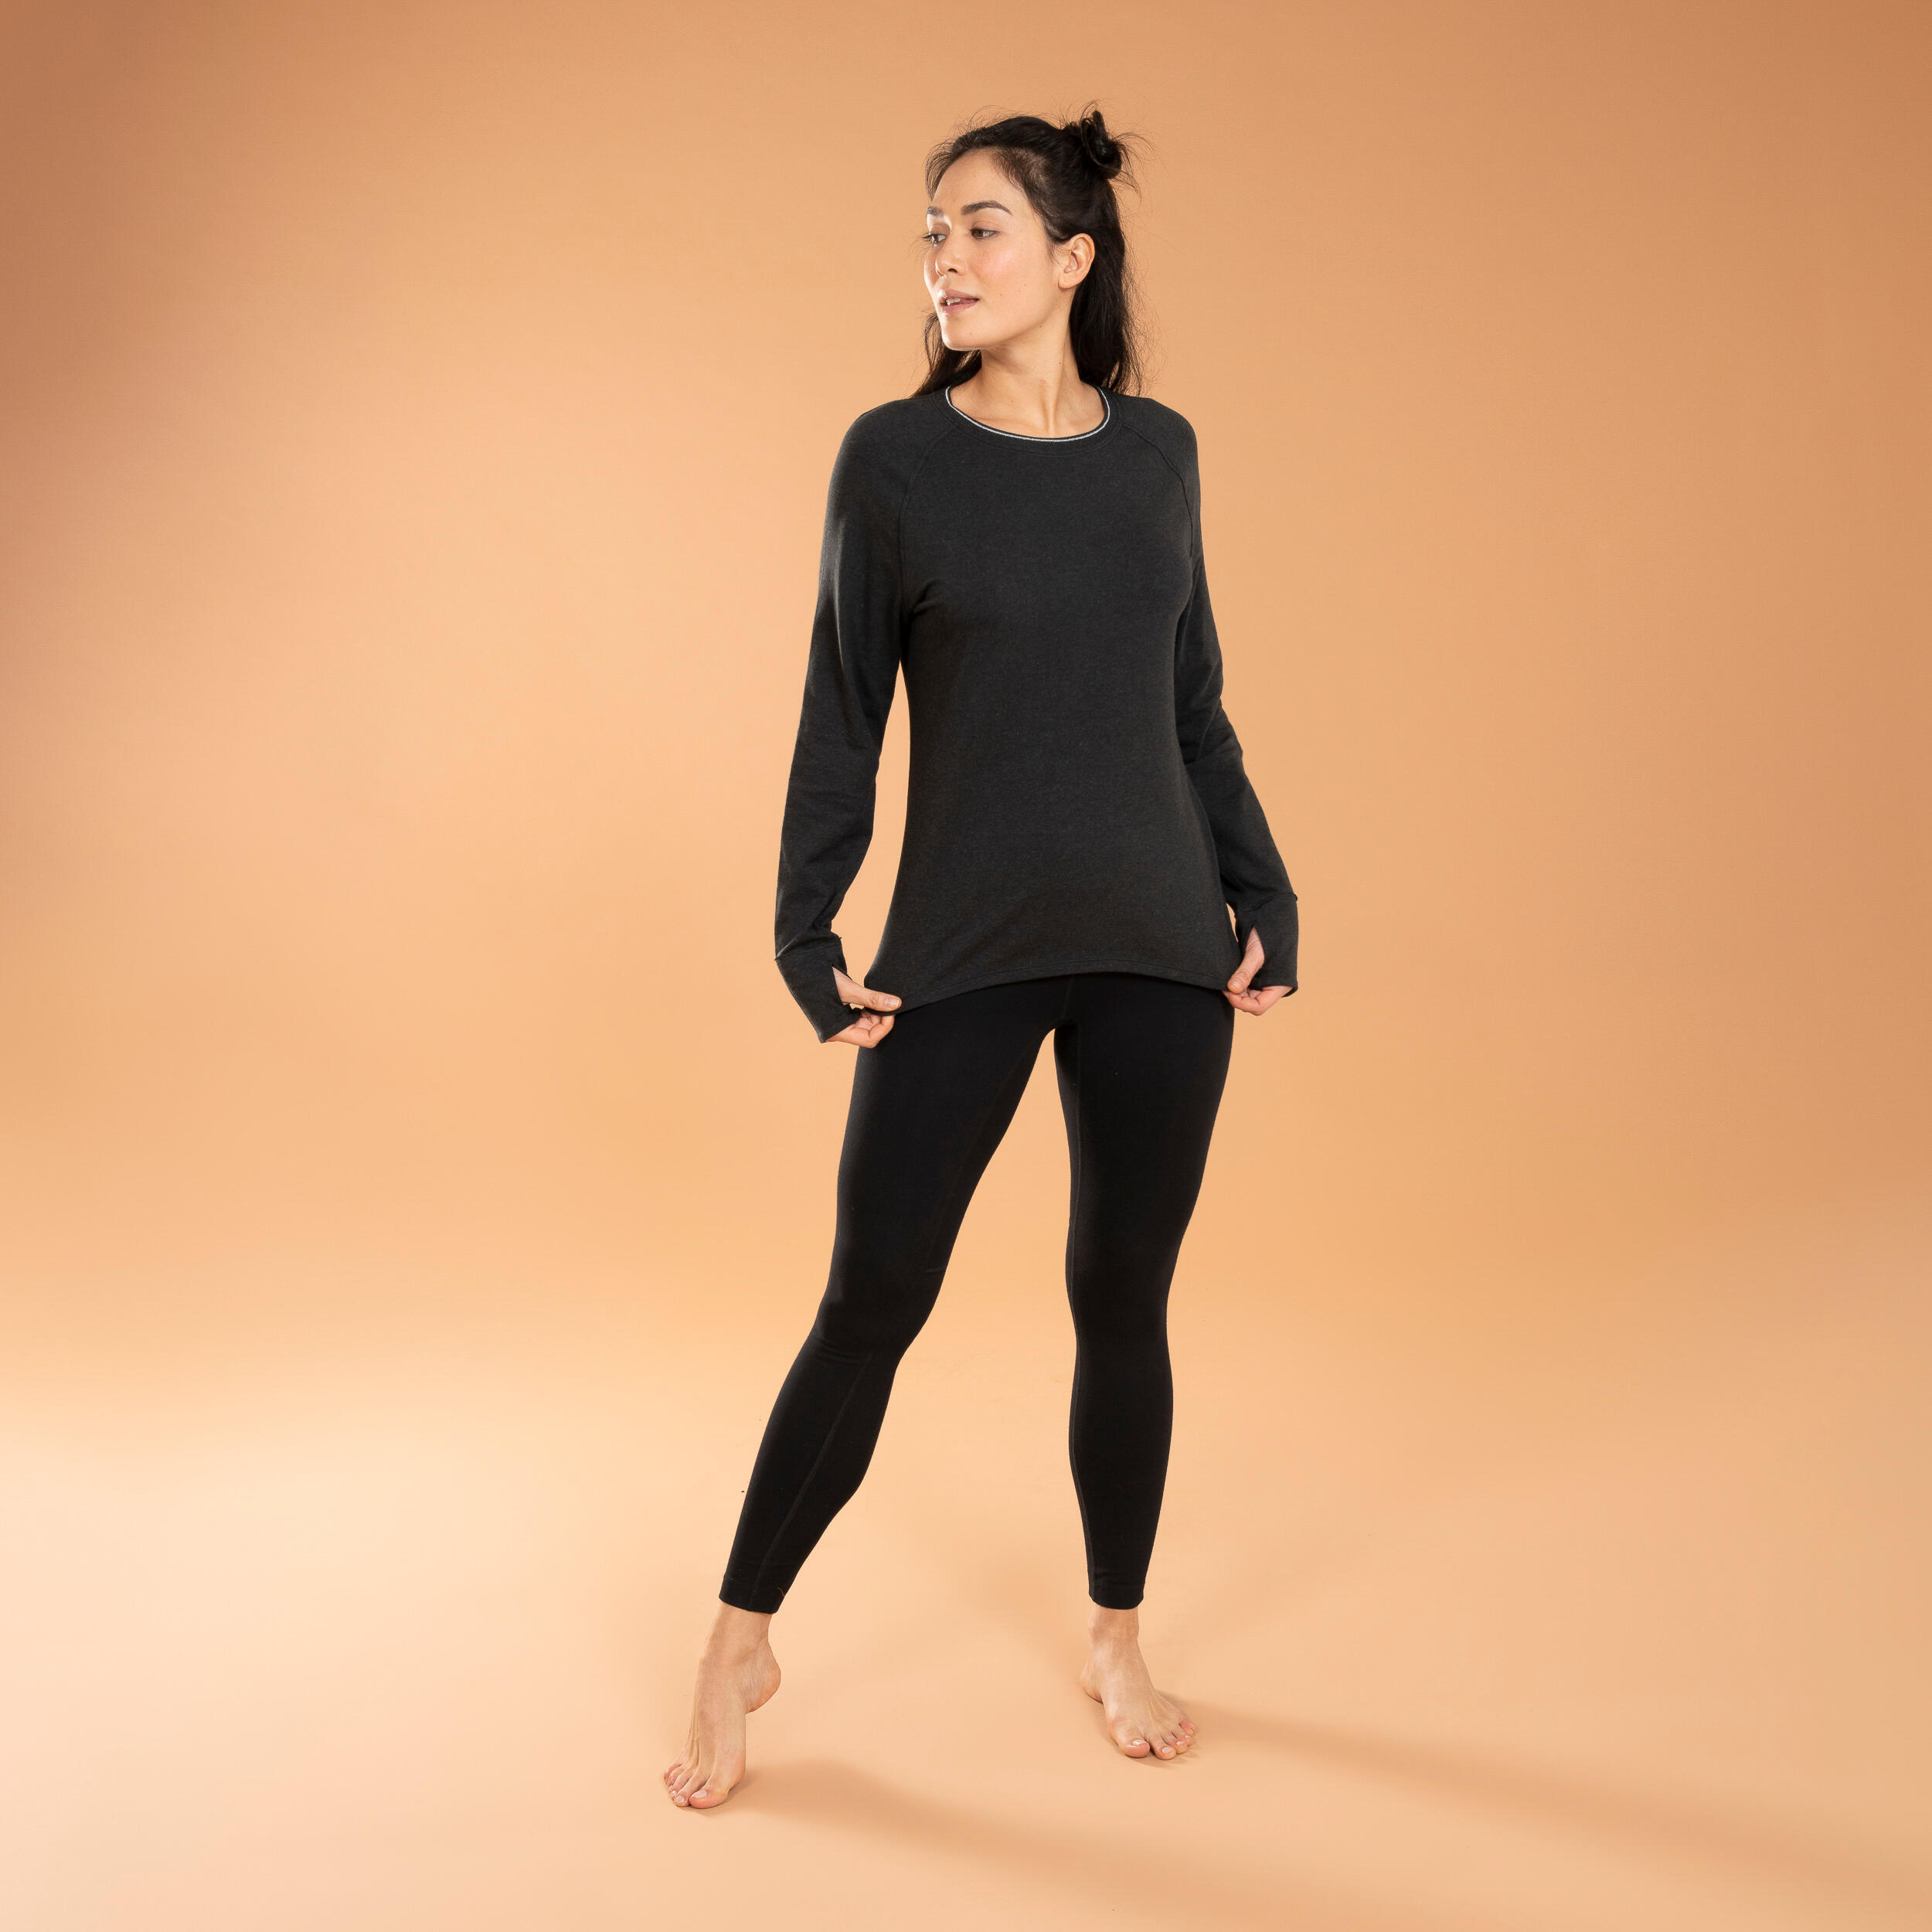 Women's Long-Sleeved Yoga T-Shirt - Black KIMJALY